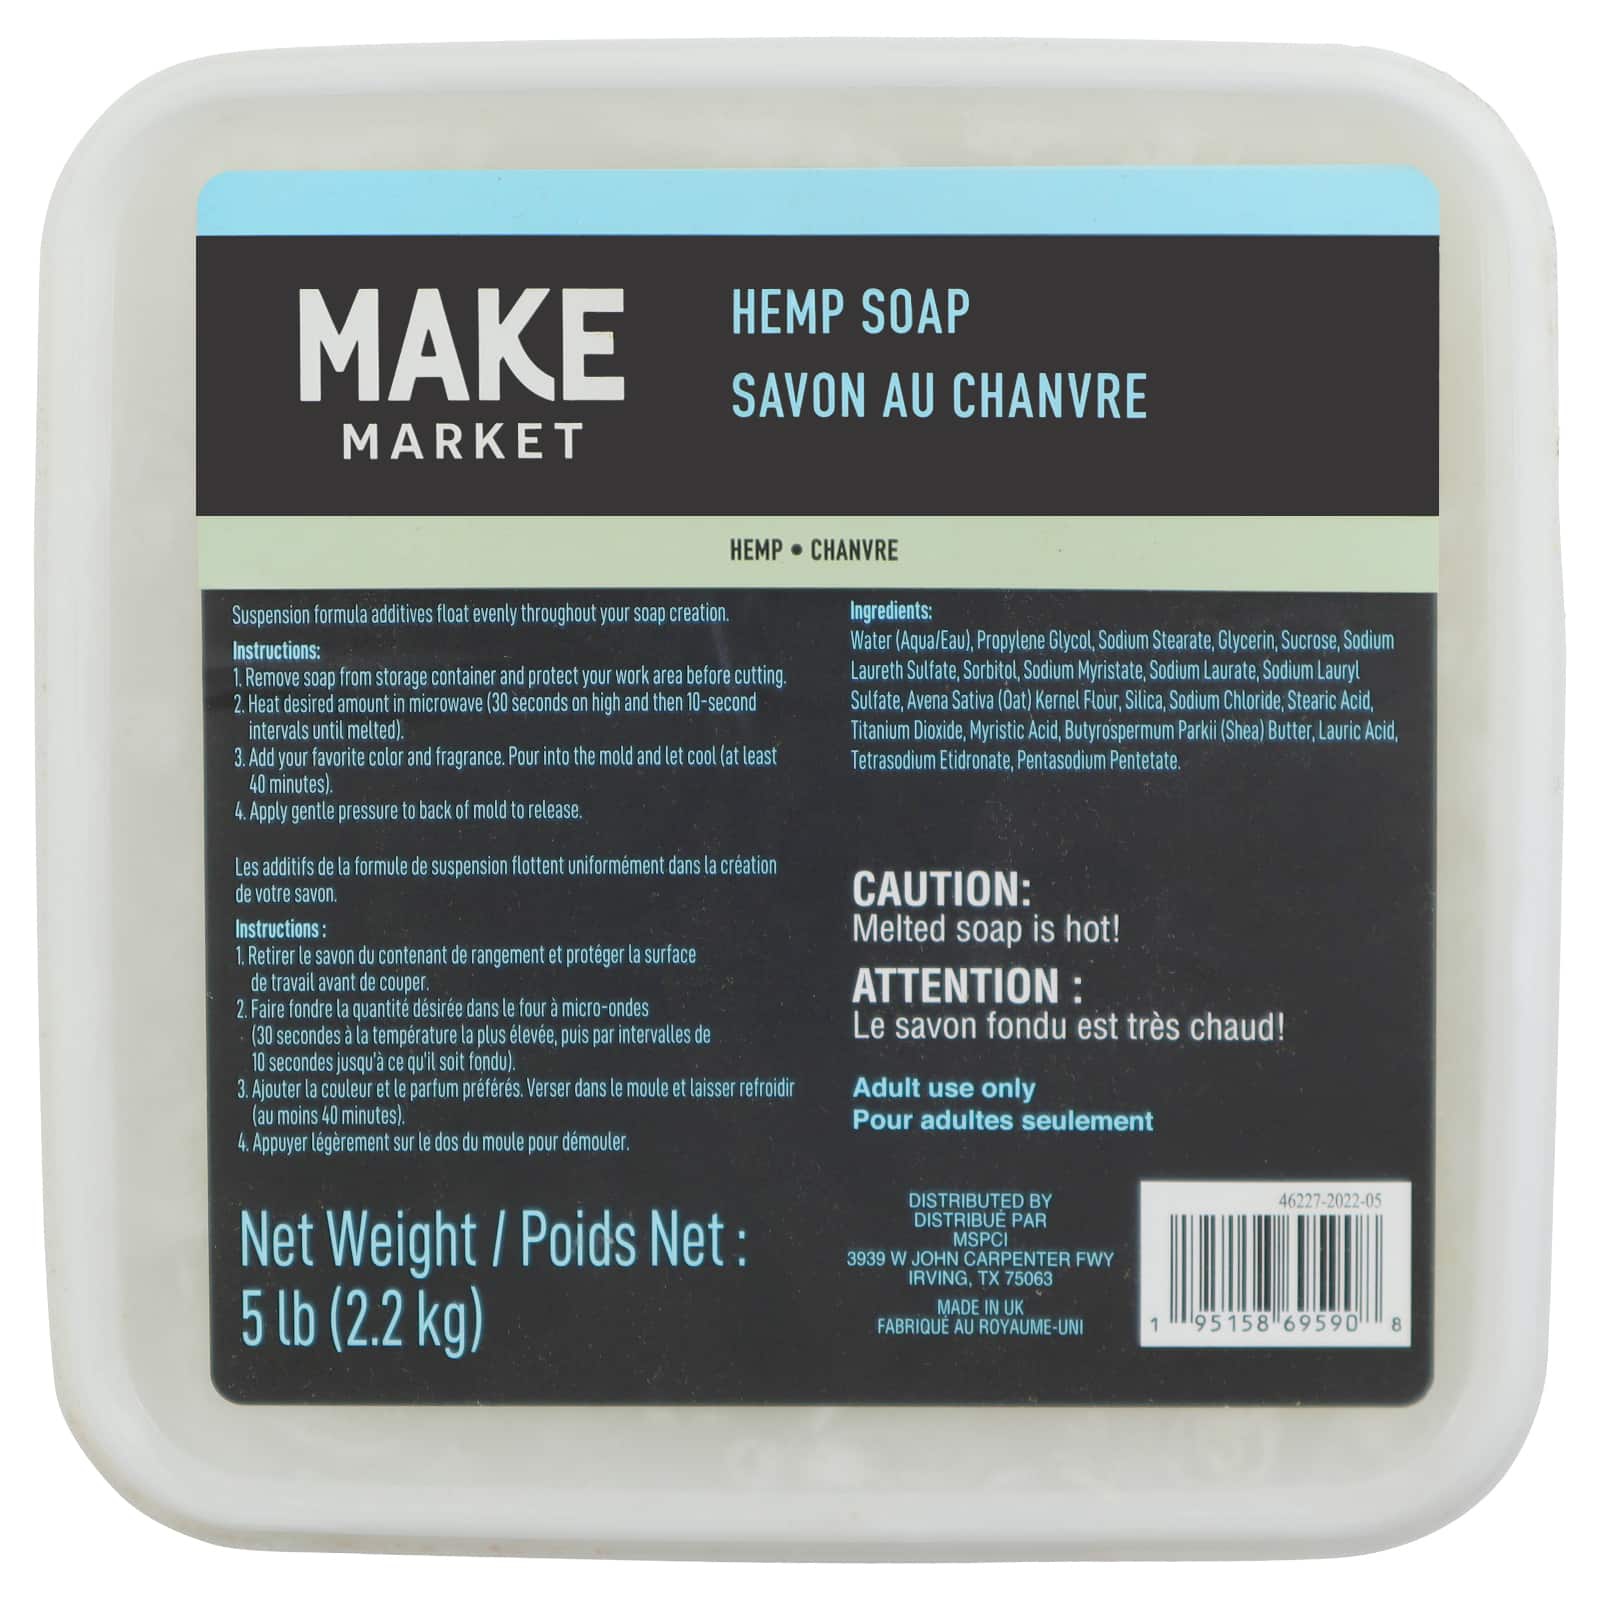 Make market Hemp Soap